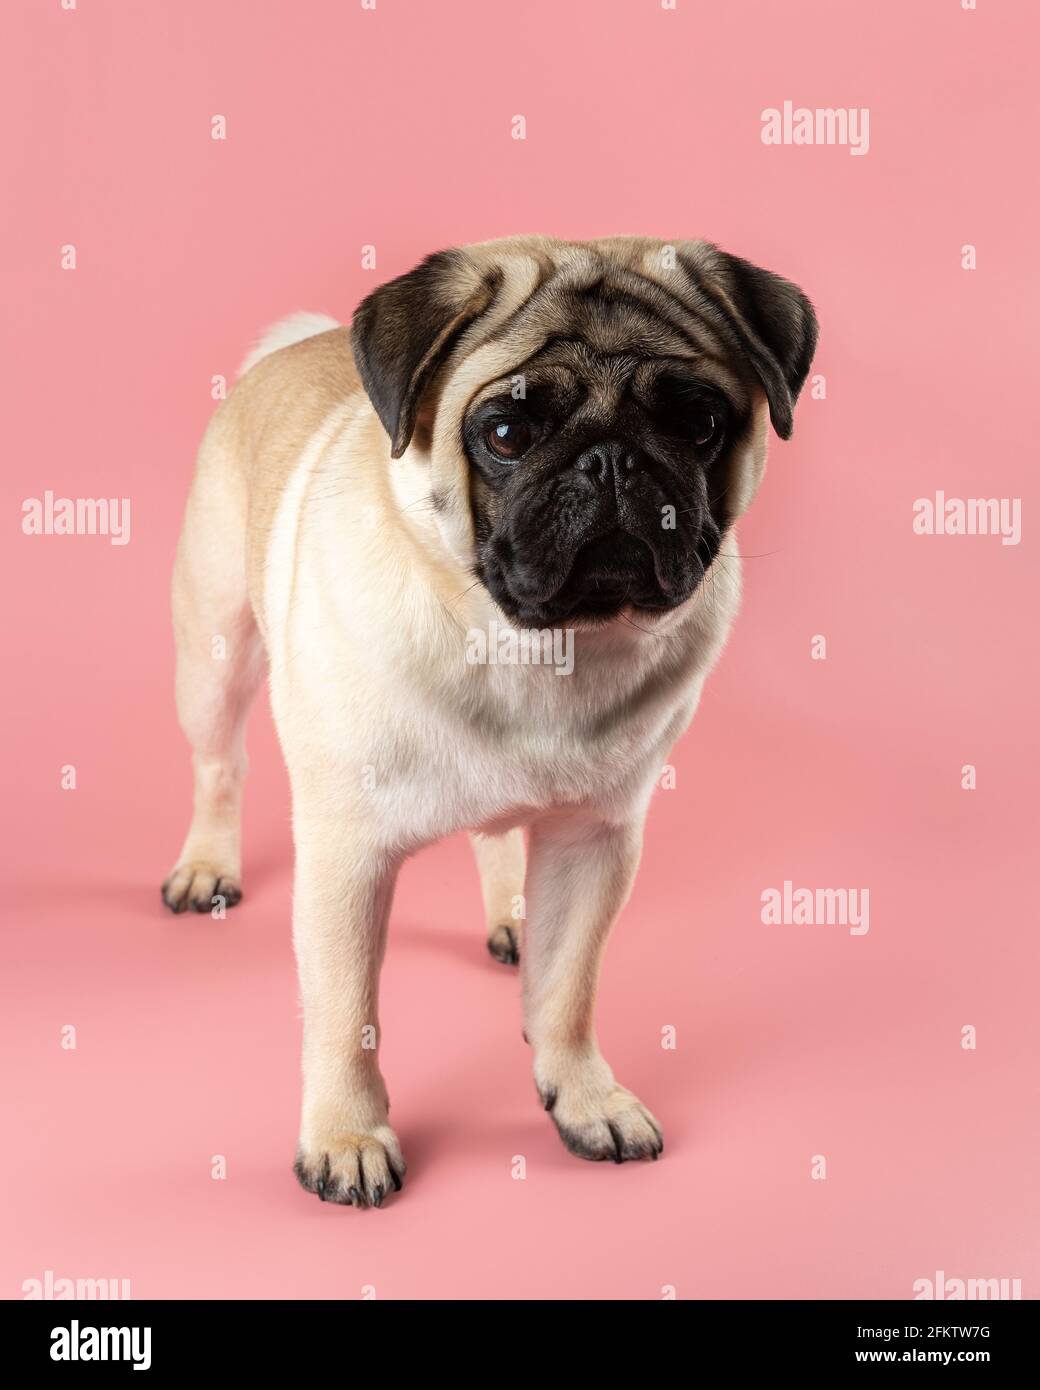 Cute Pug dog on pink background. Stock Photo